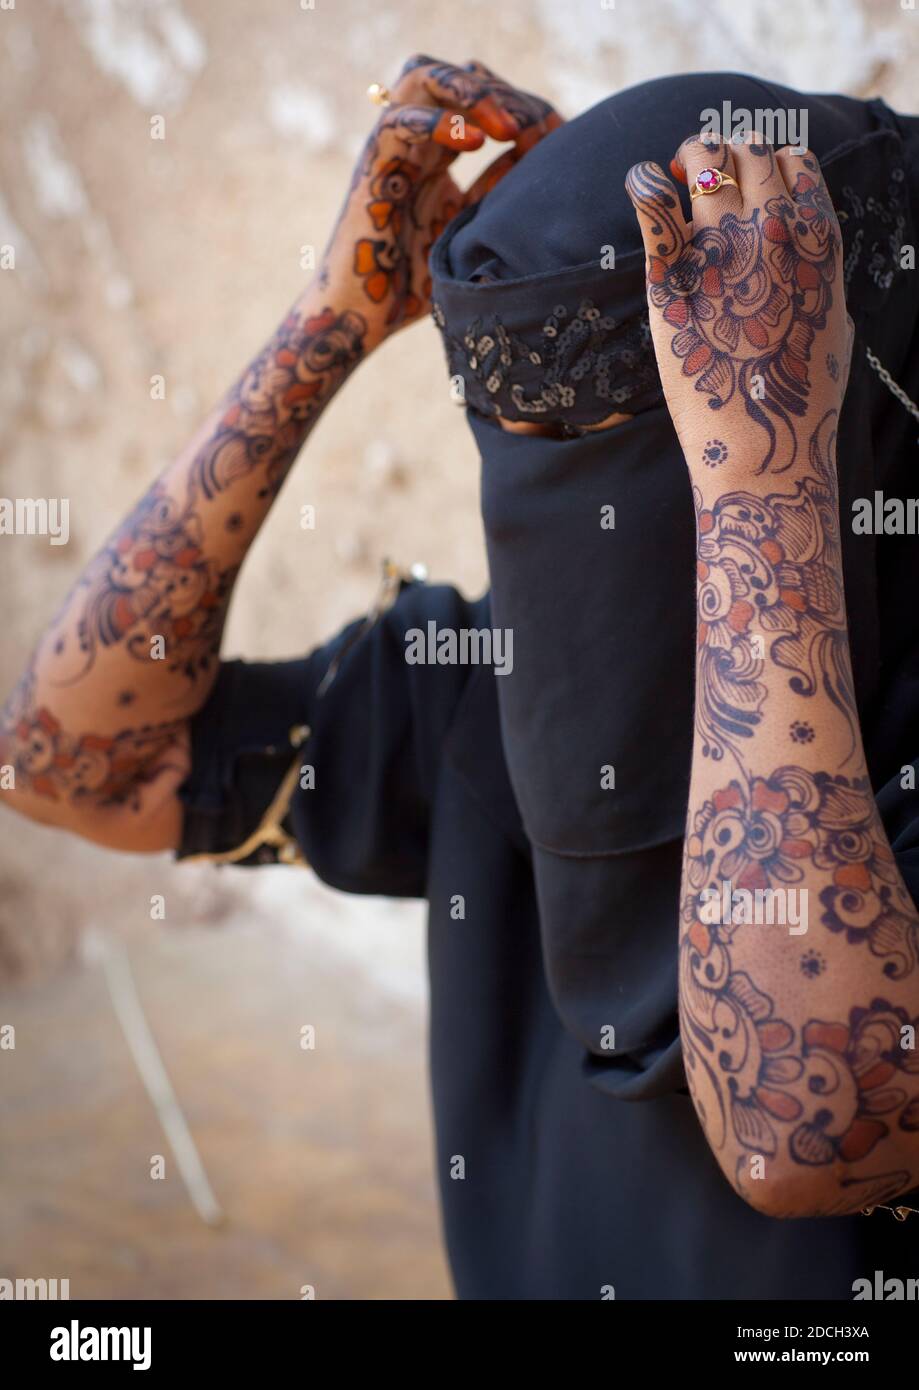 Mideast Lebanon Shiite Tattoos Photo Essay | | hanfordsentinel.com